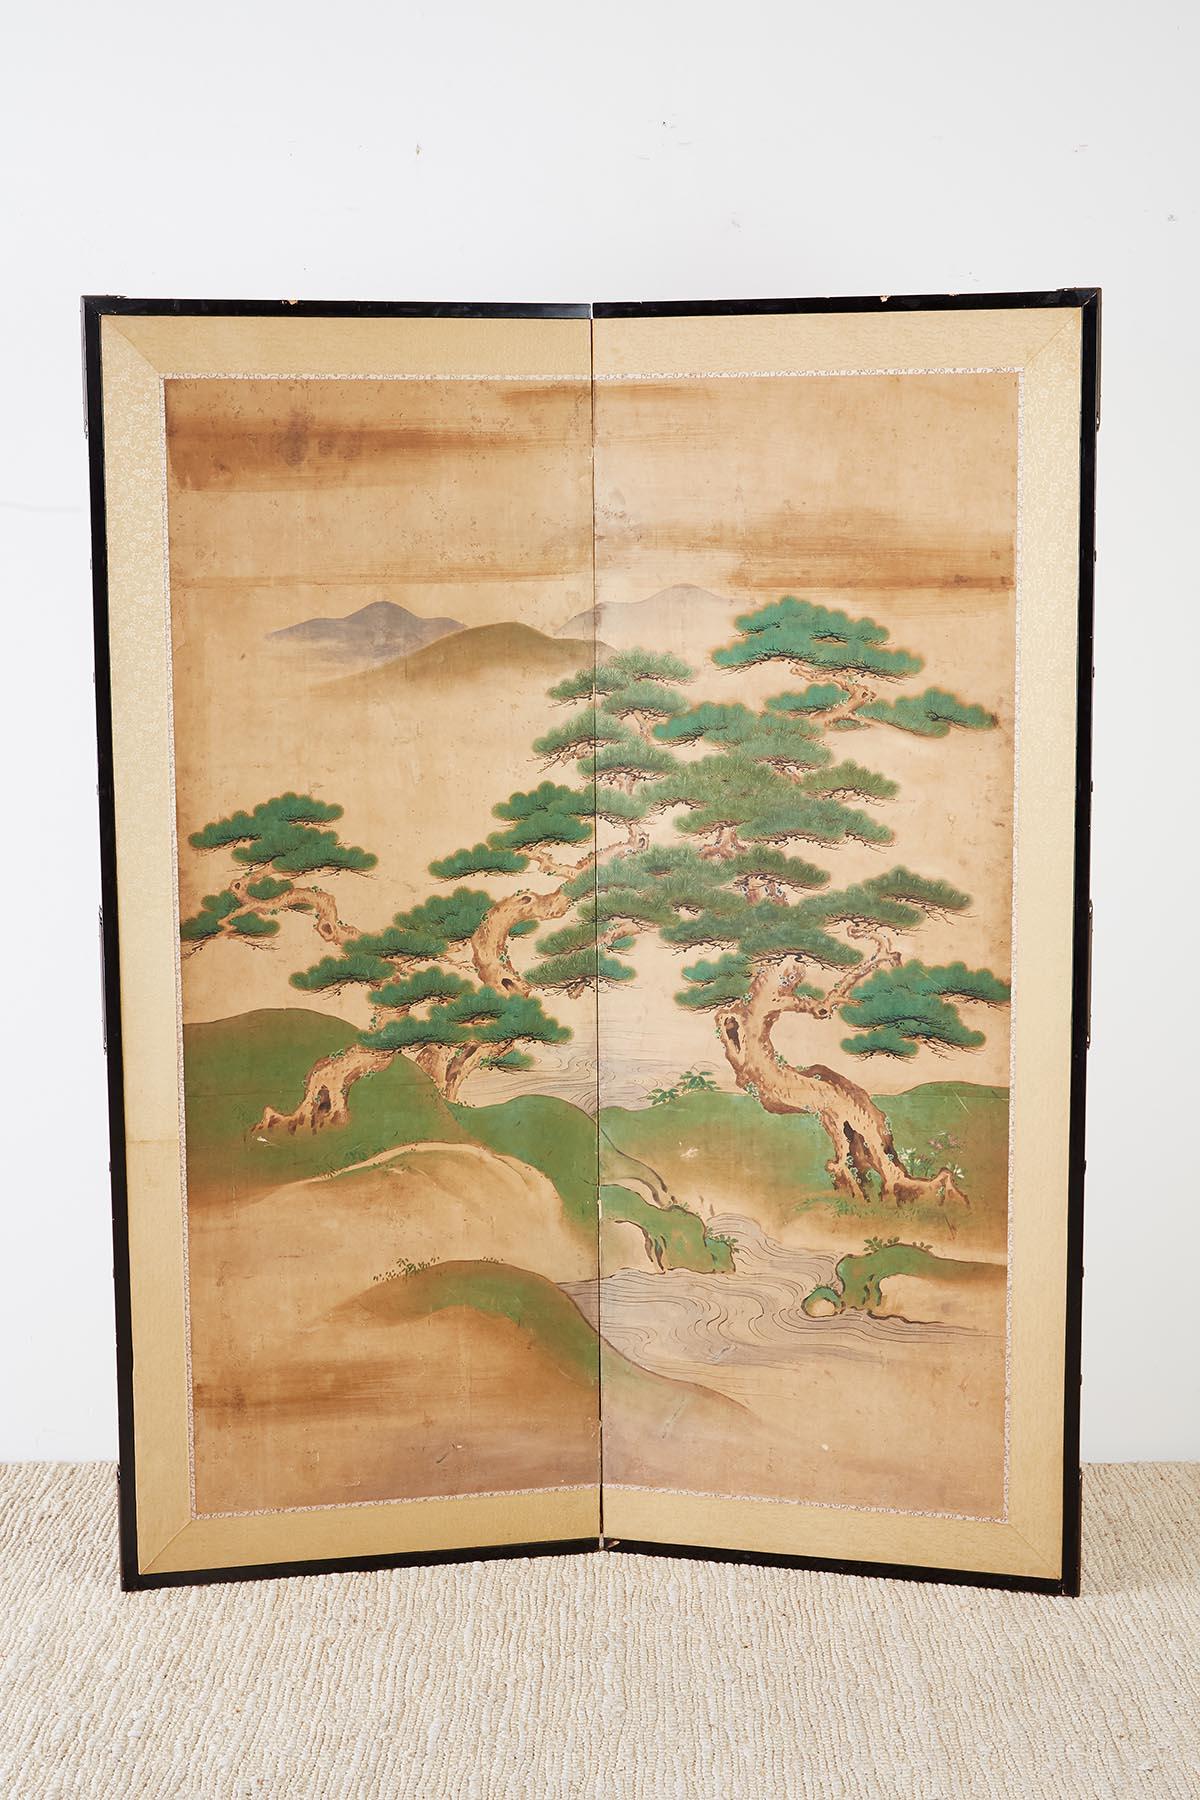 Edo 18th Century Japanese Two-Panel Kano School Screen